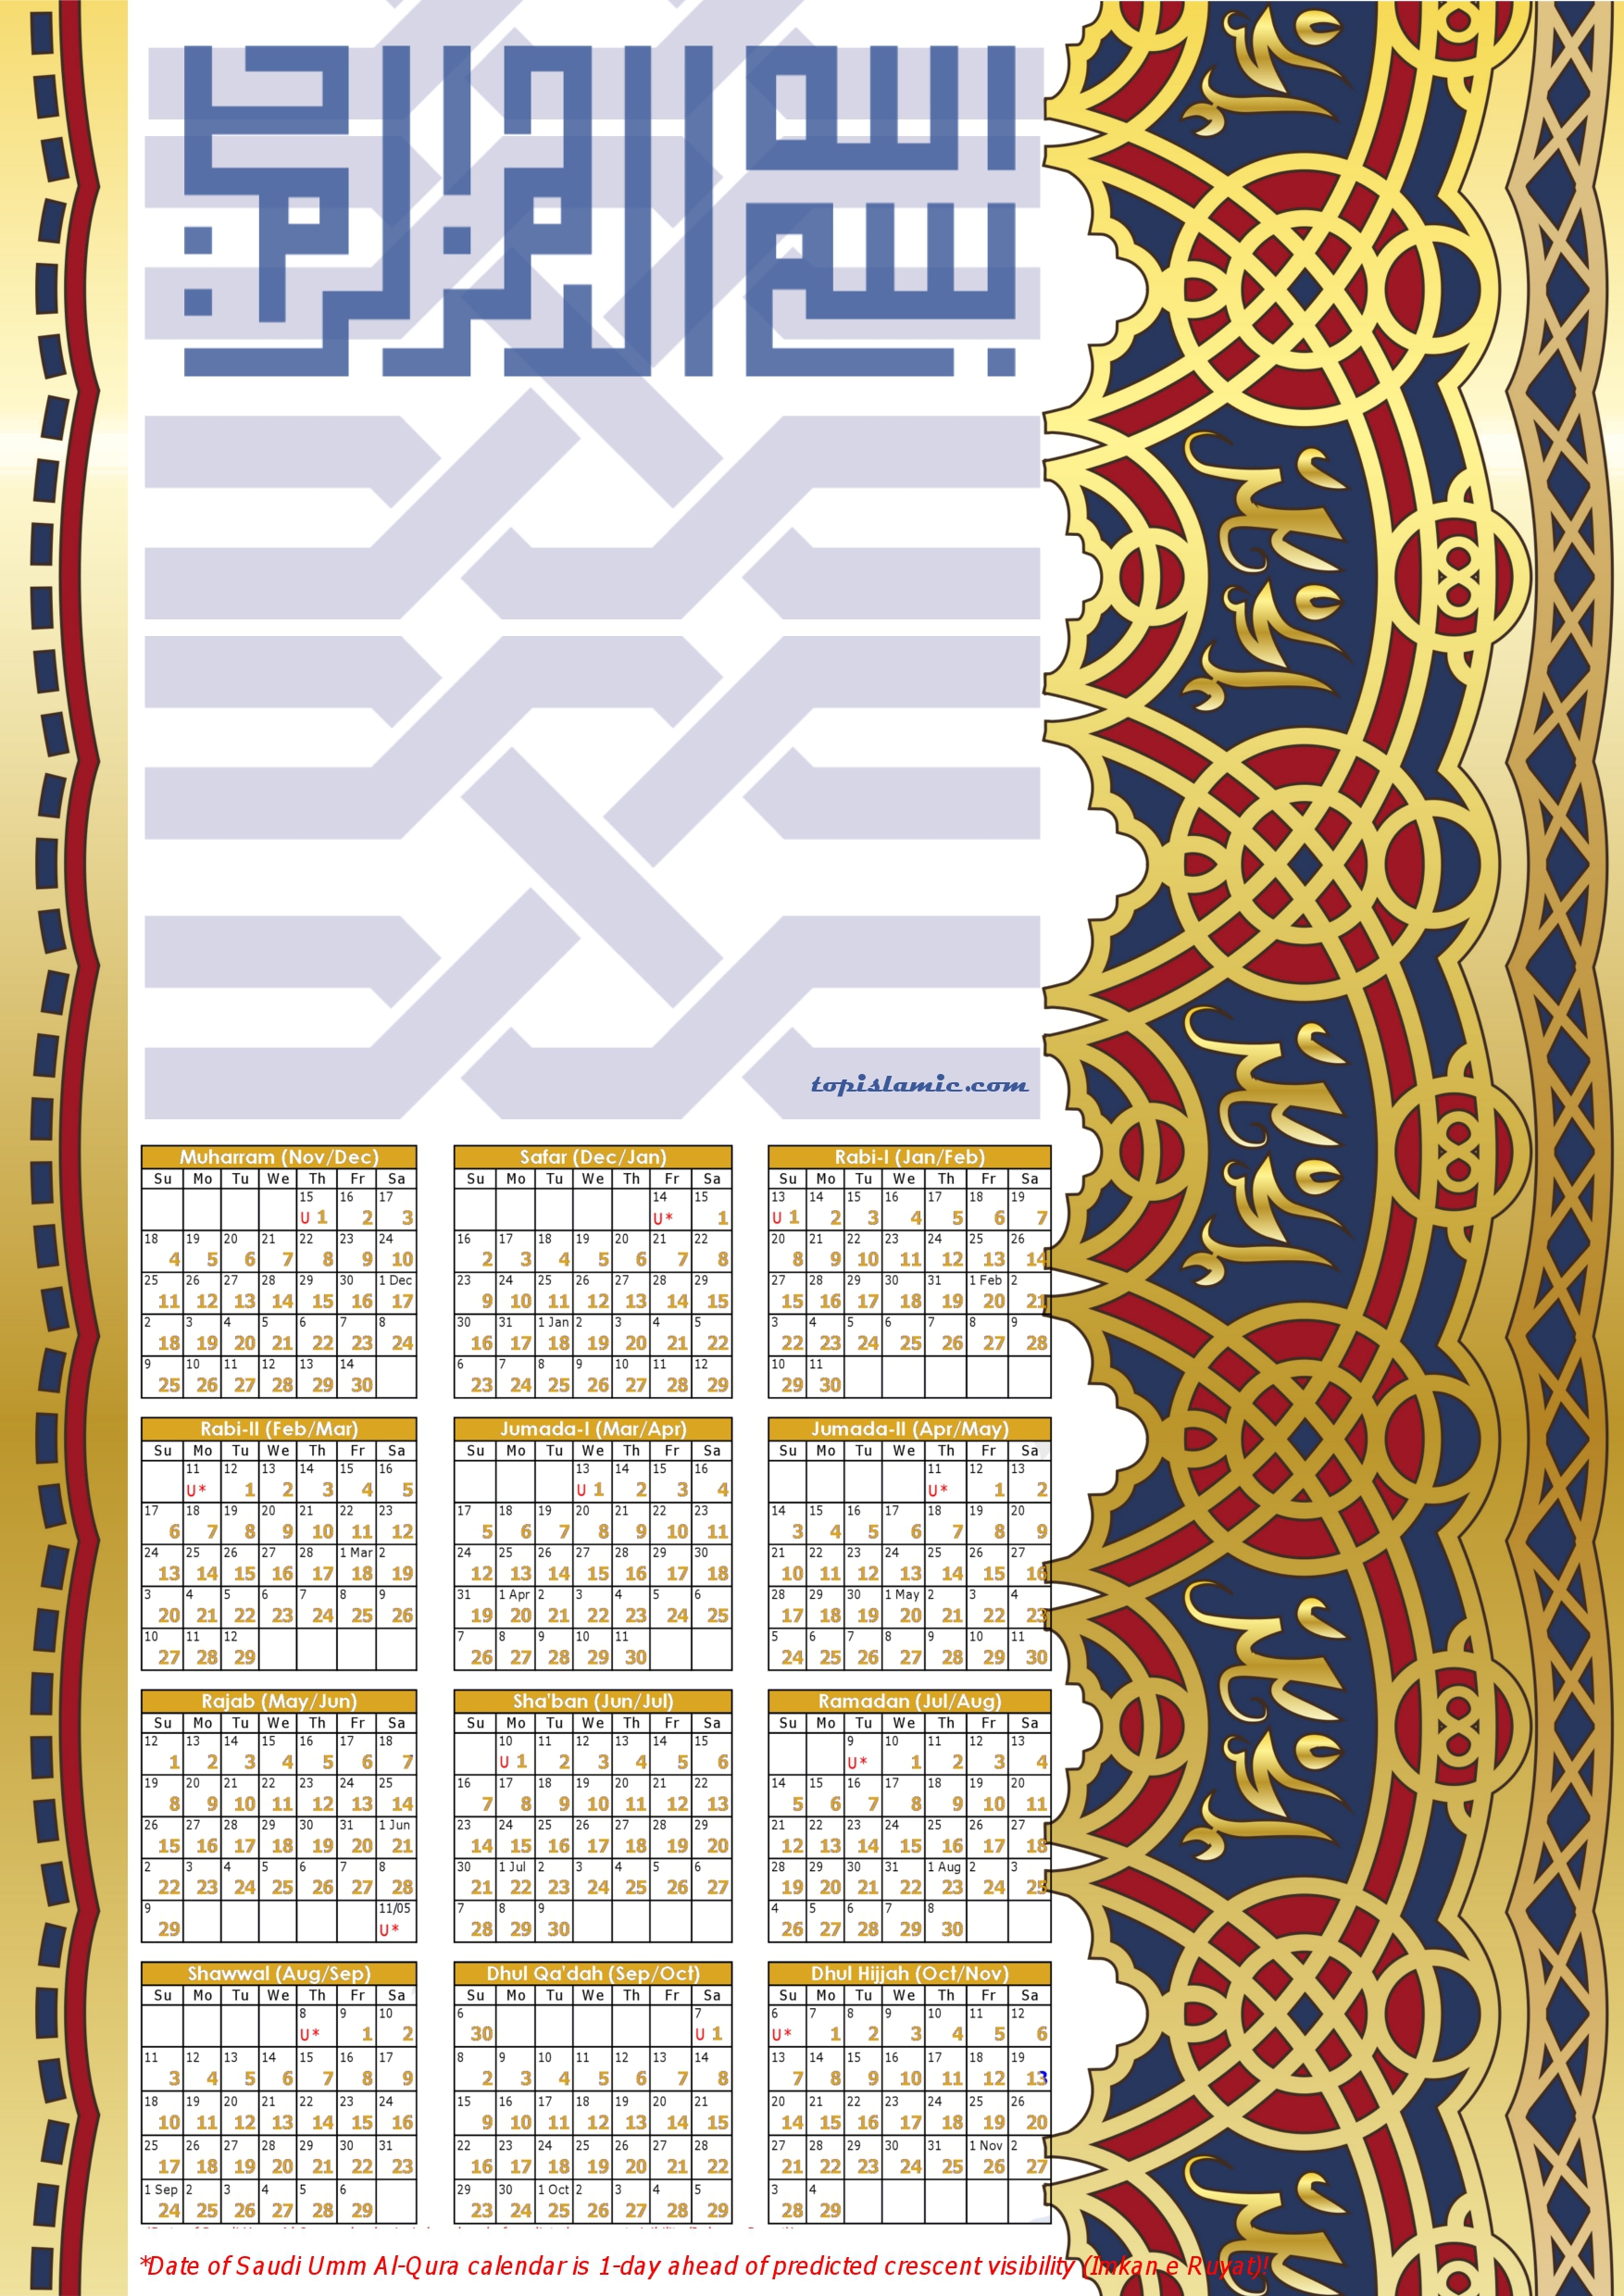 hijri-calendar-1434-islamic-calendar-2012-13-download